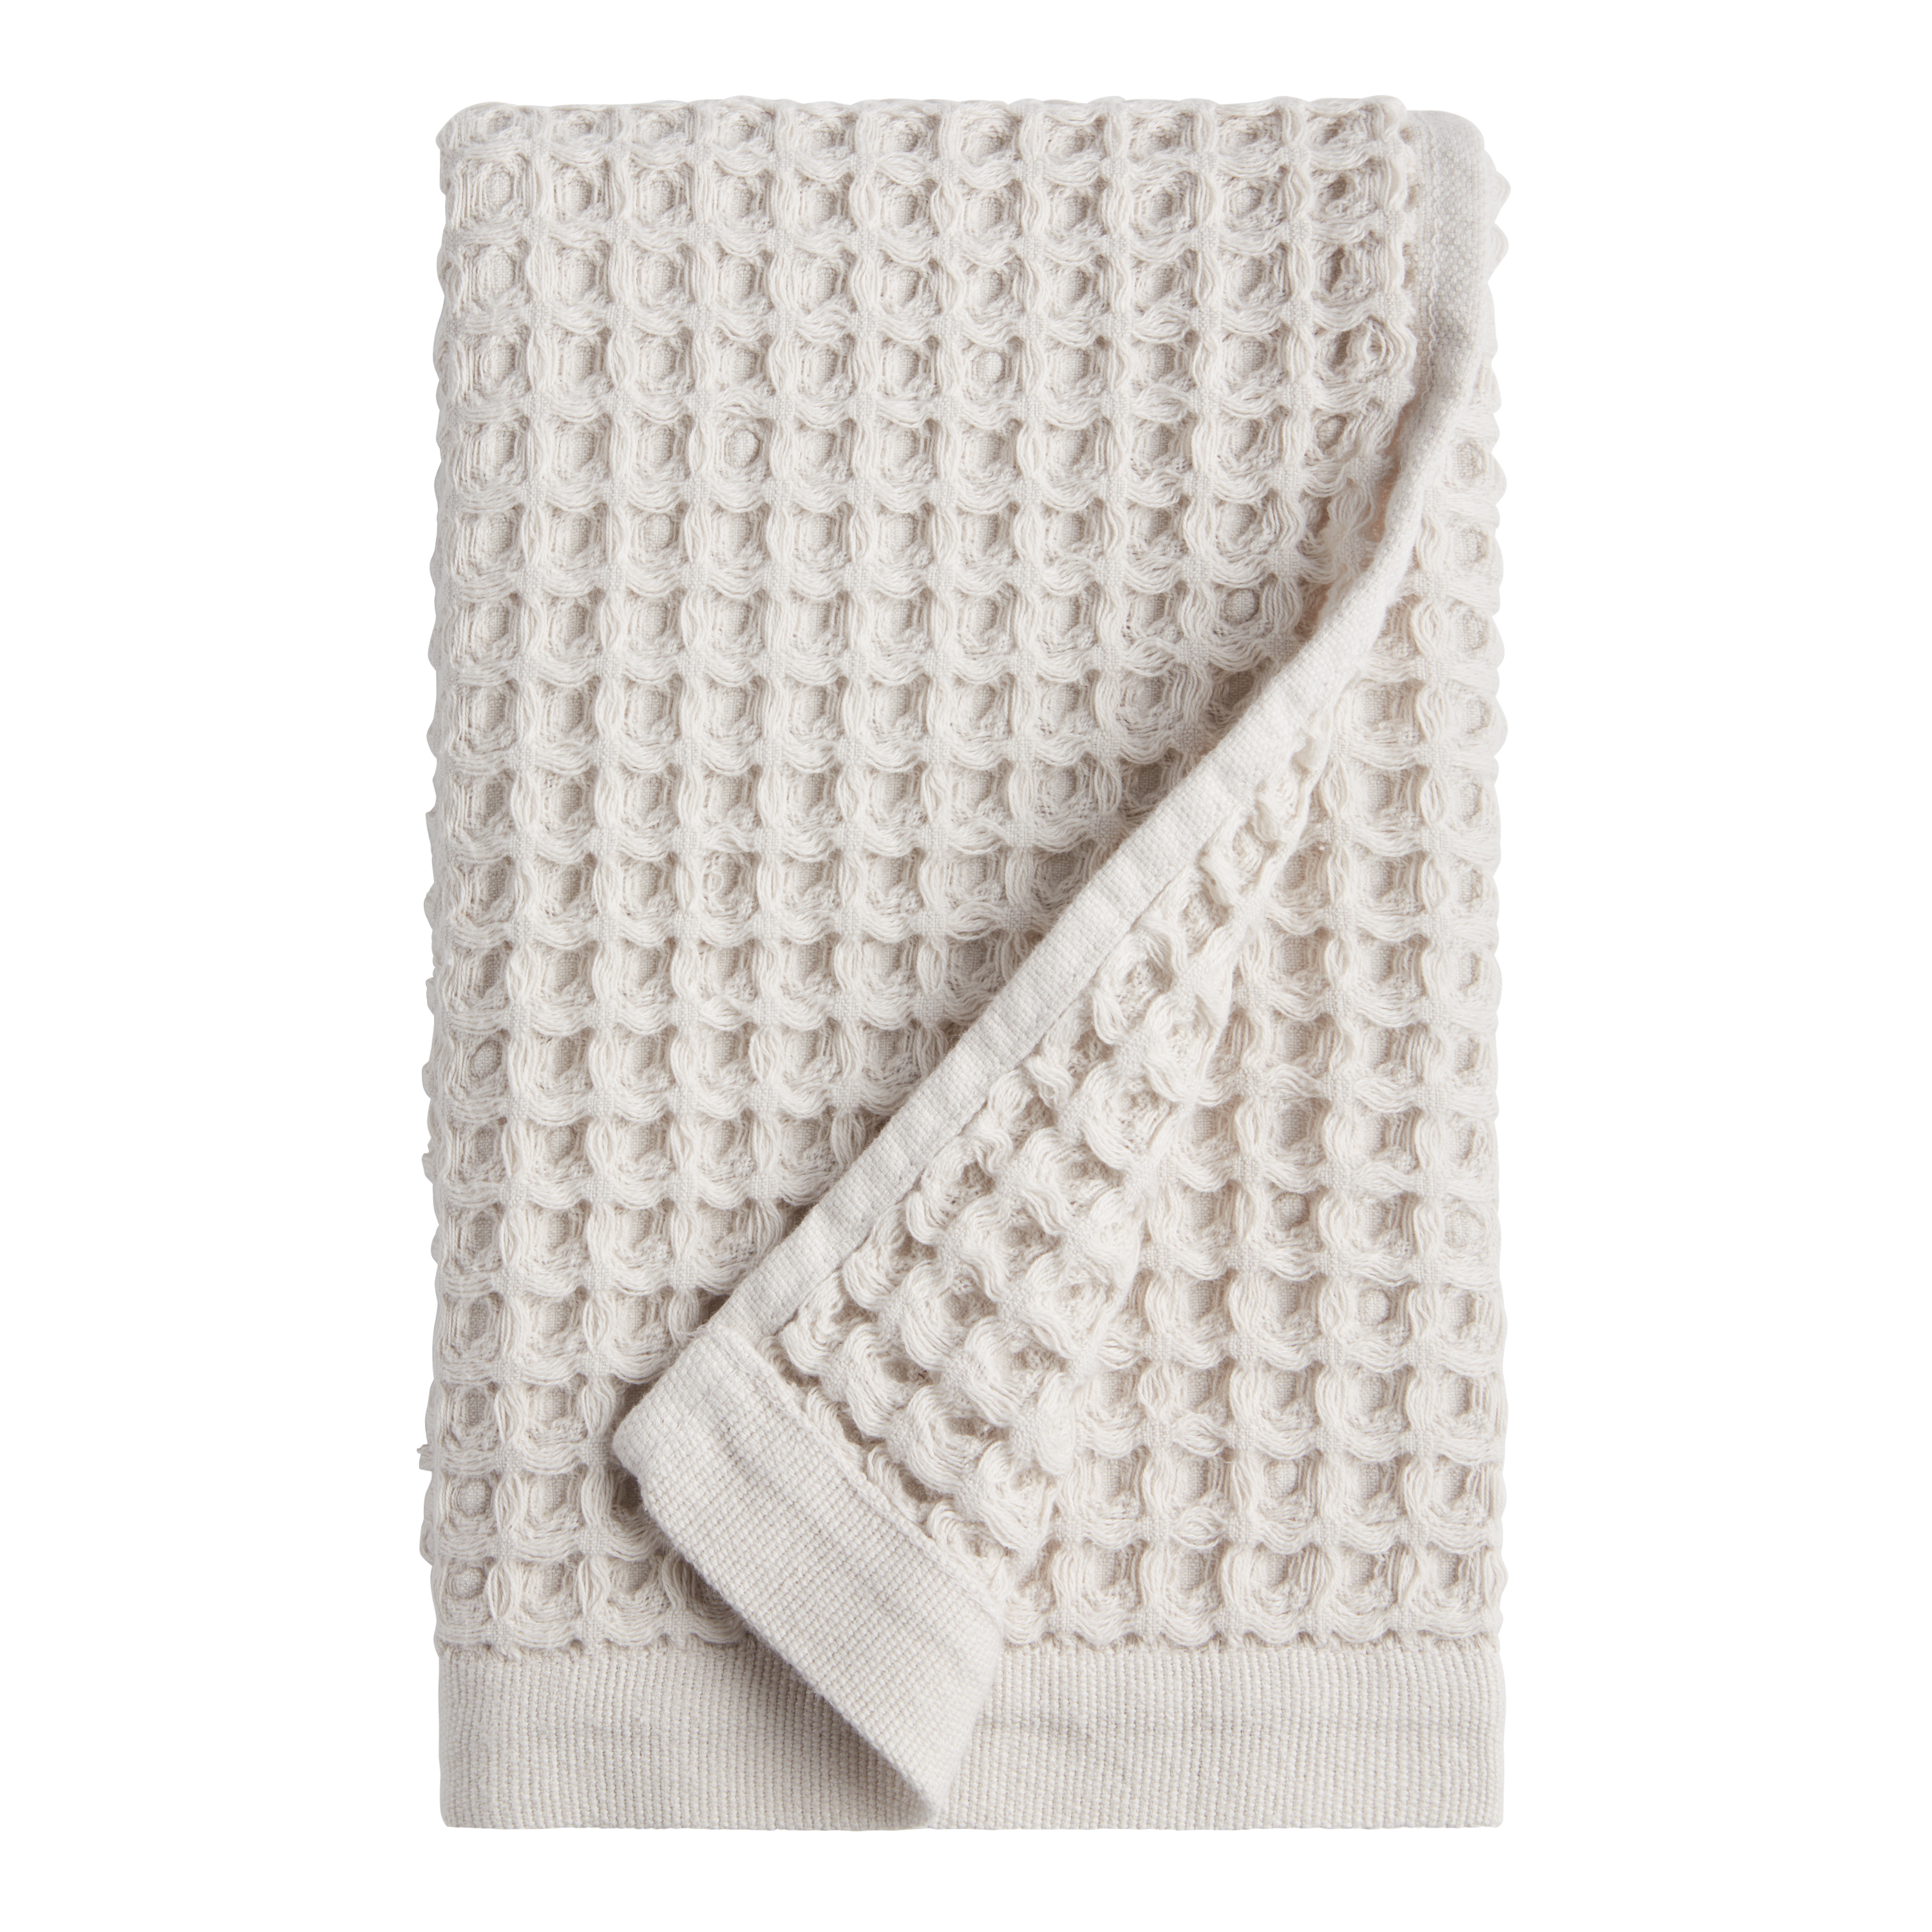 Buy Kitchen Towel Hand Towel Dish Towel Cotton Waffle Knit Online